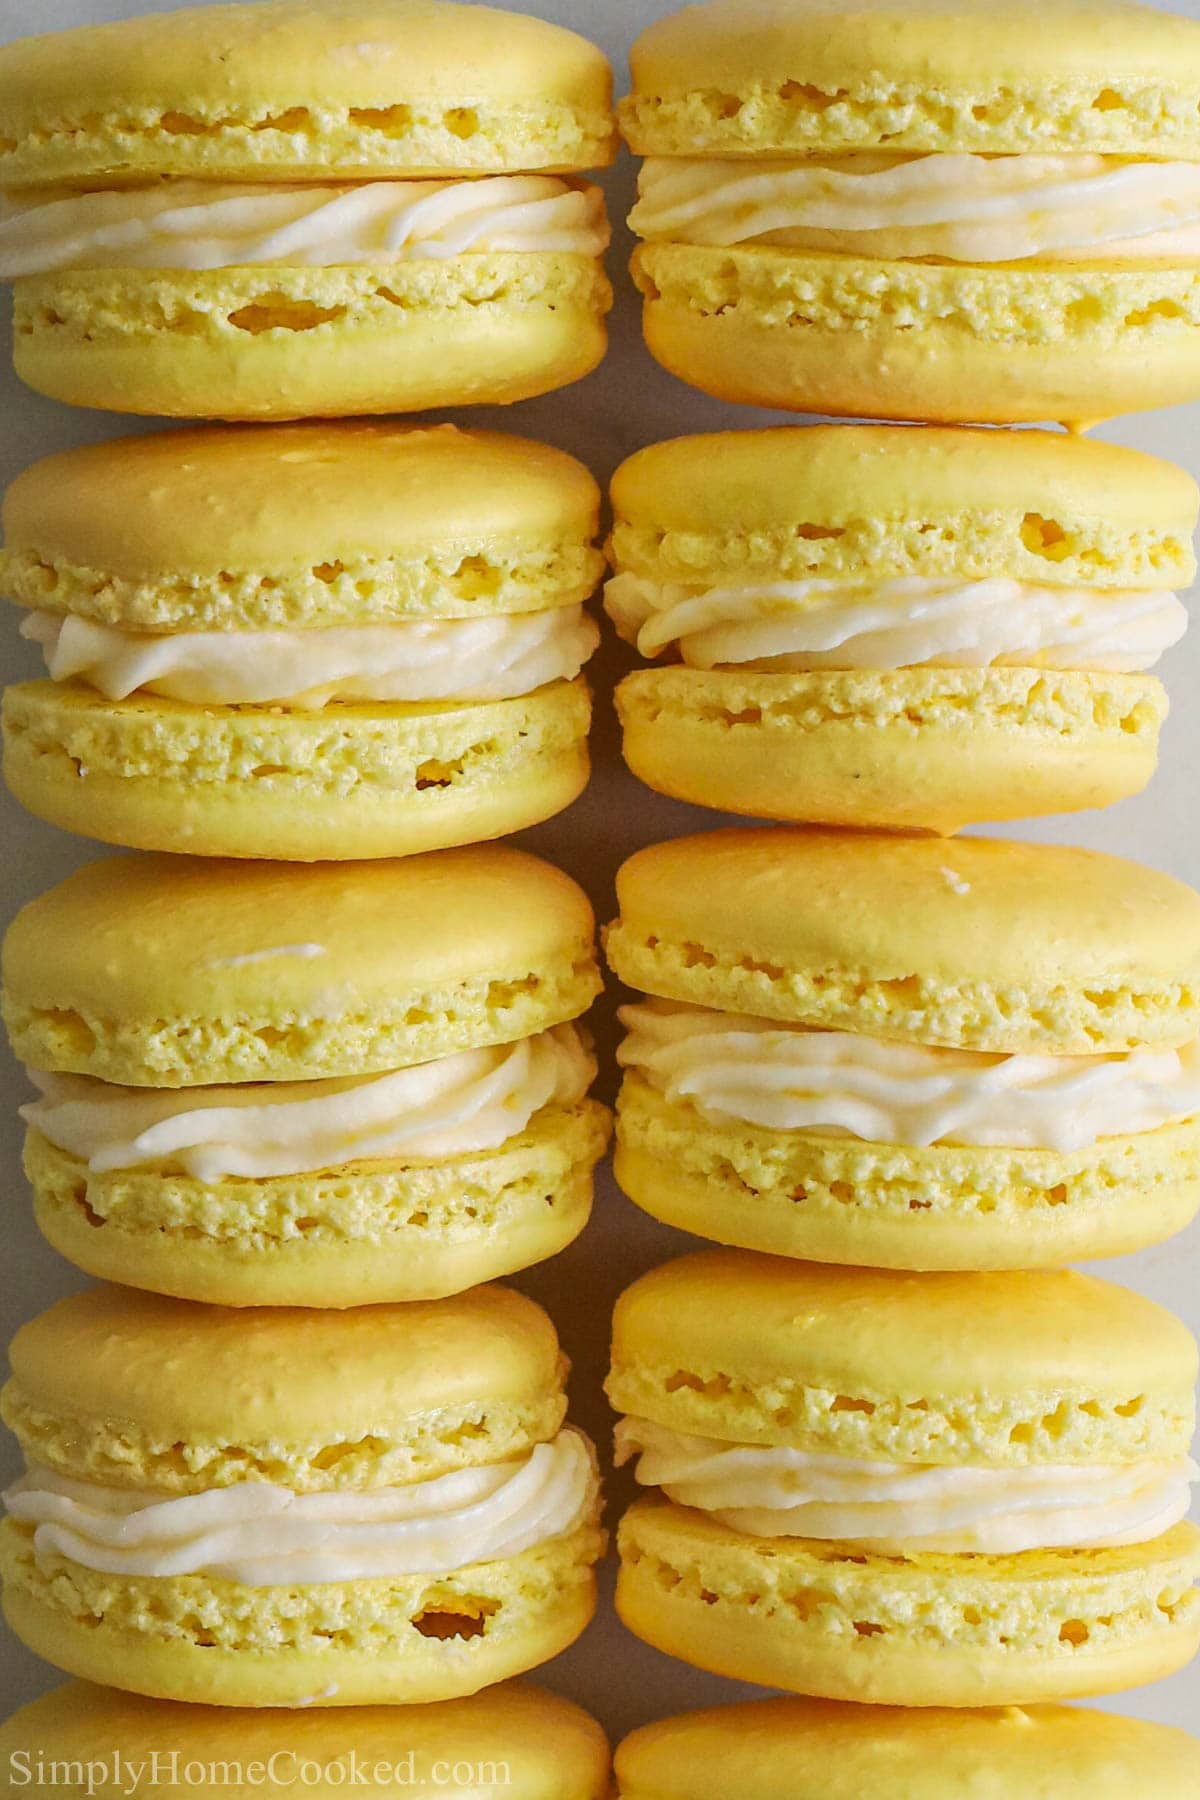 Vertical image of stacks of Lemon Macarons